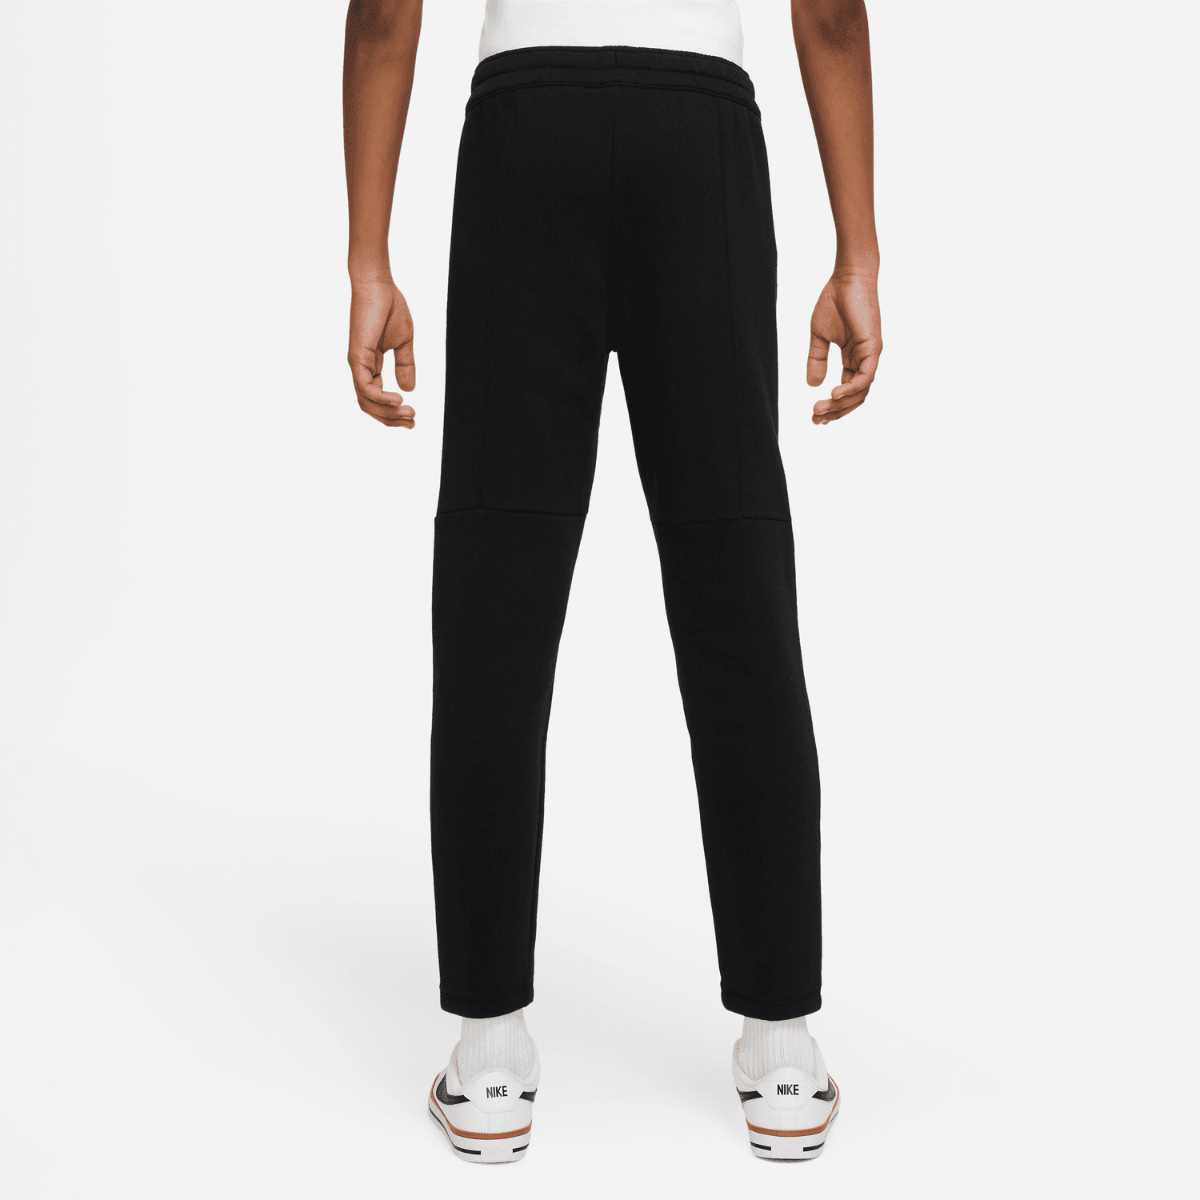 Pantalon Nike Sportswear Amplify Junior - Noir/Blanc